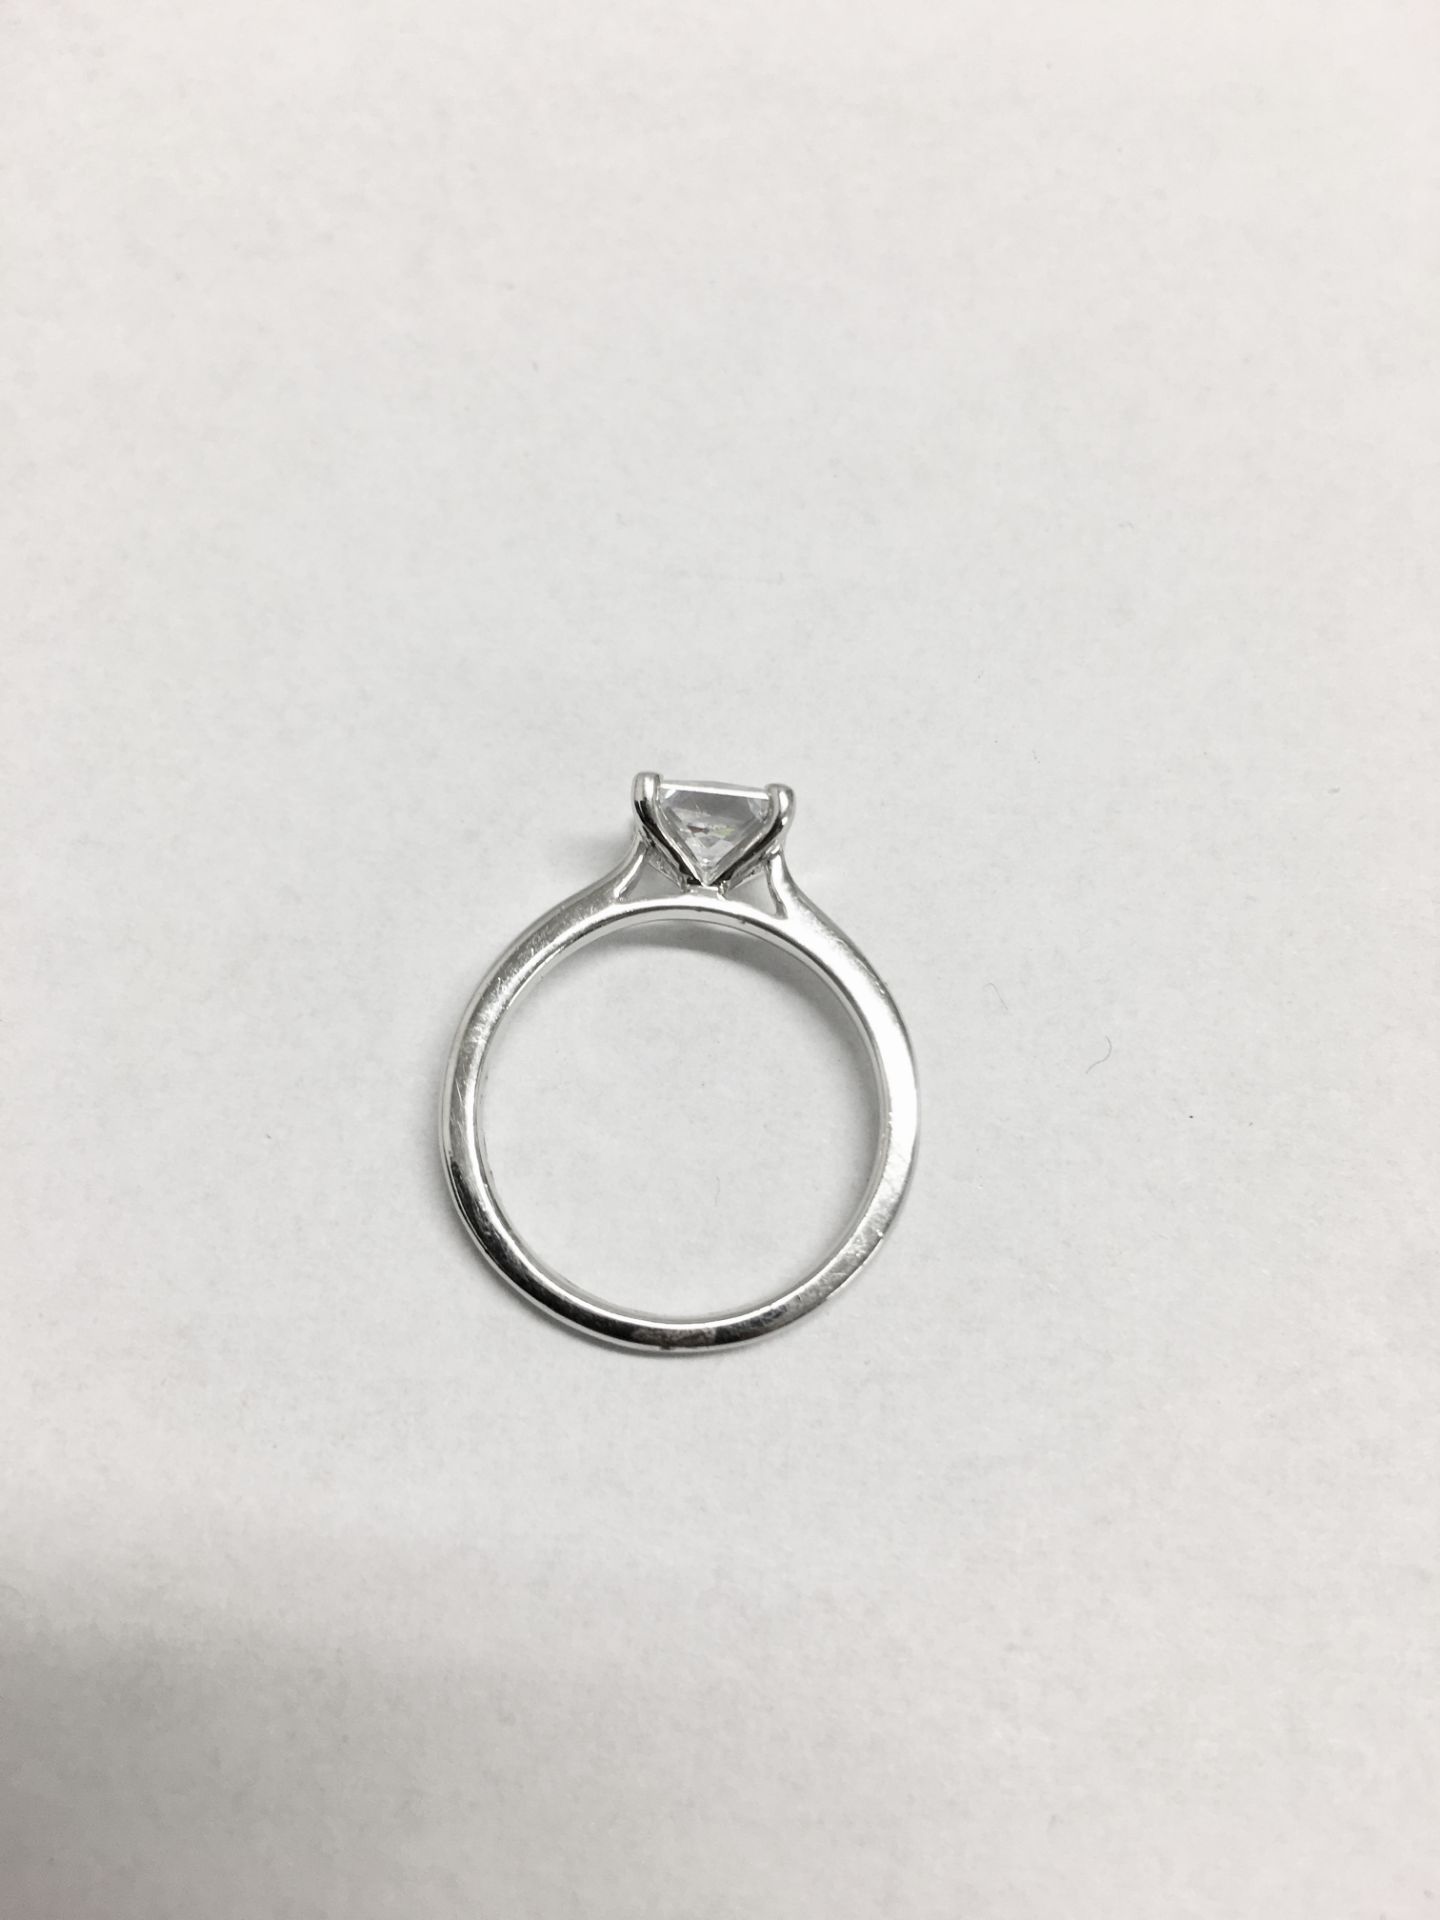 Platinum princess diamond solitaire ring,0.45ct princess cut diamon ,h colour si2 clarity,3.59gms - Image 2 of 2